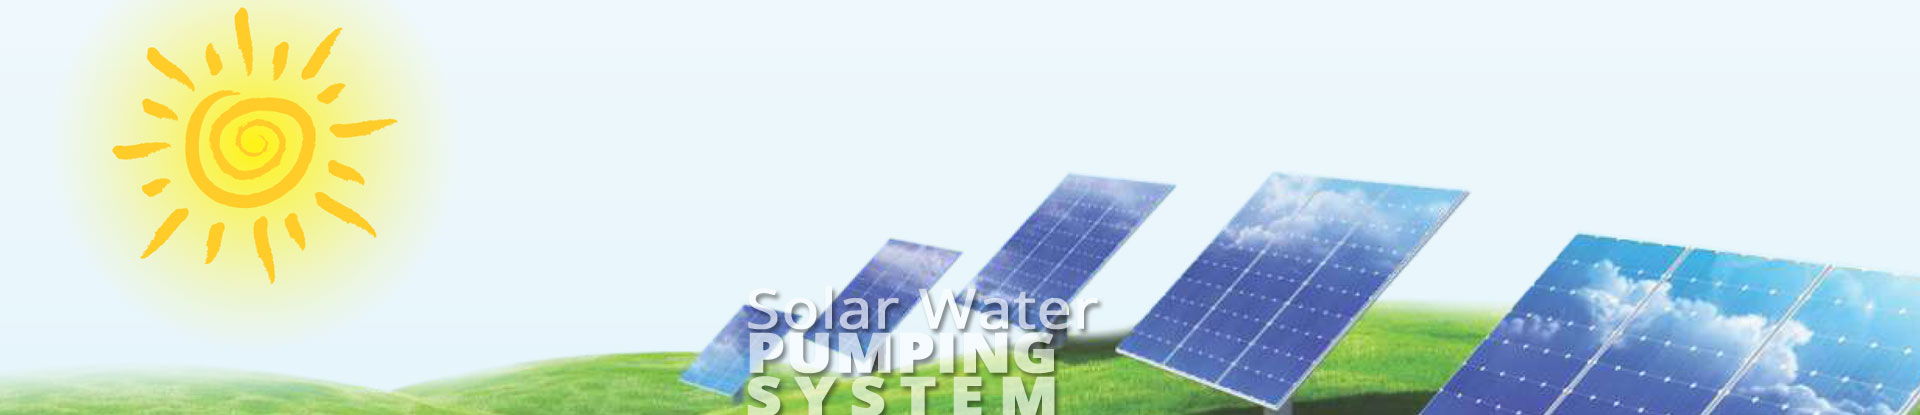 Solar Water Pumping System | Captain Polyplast Ltd.